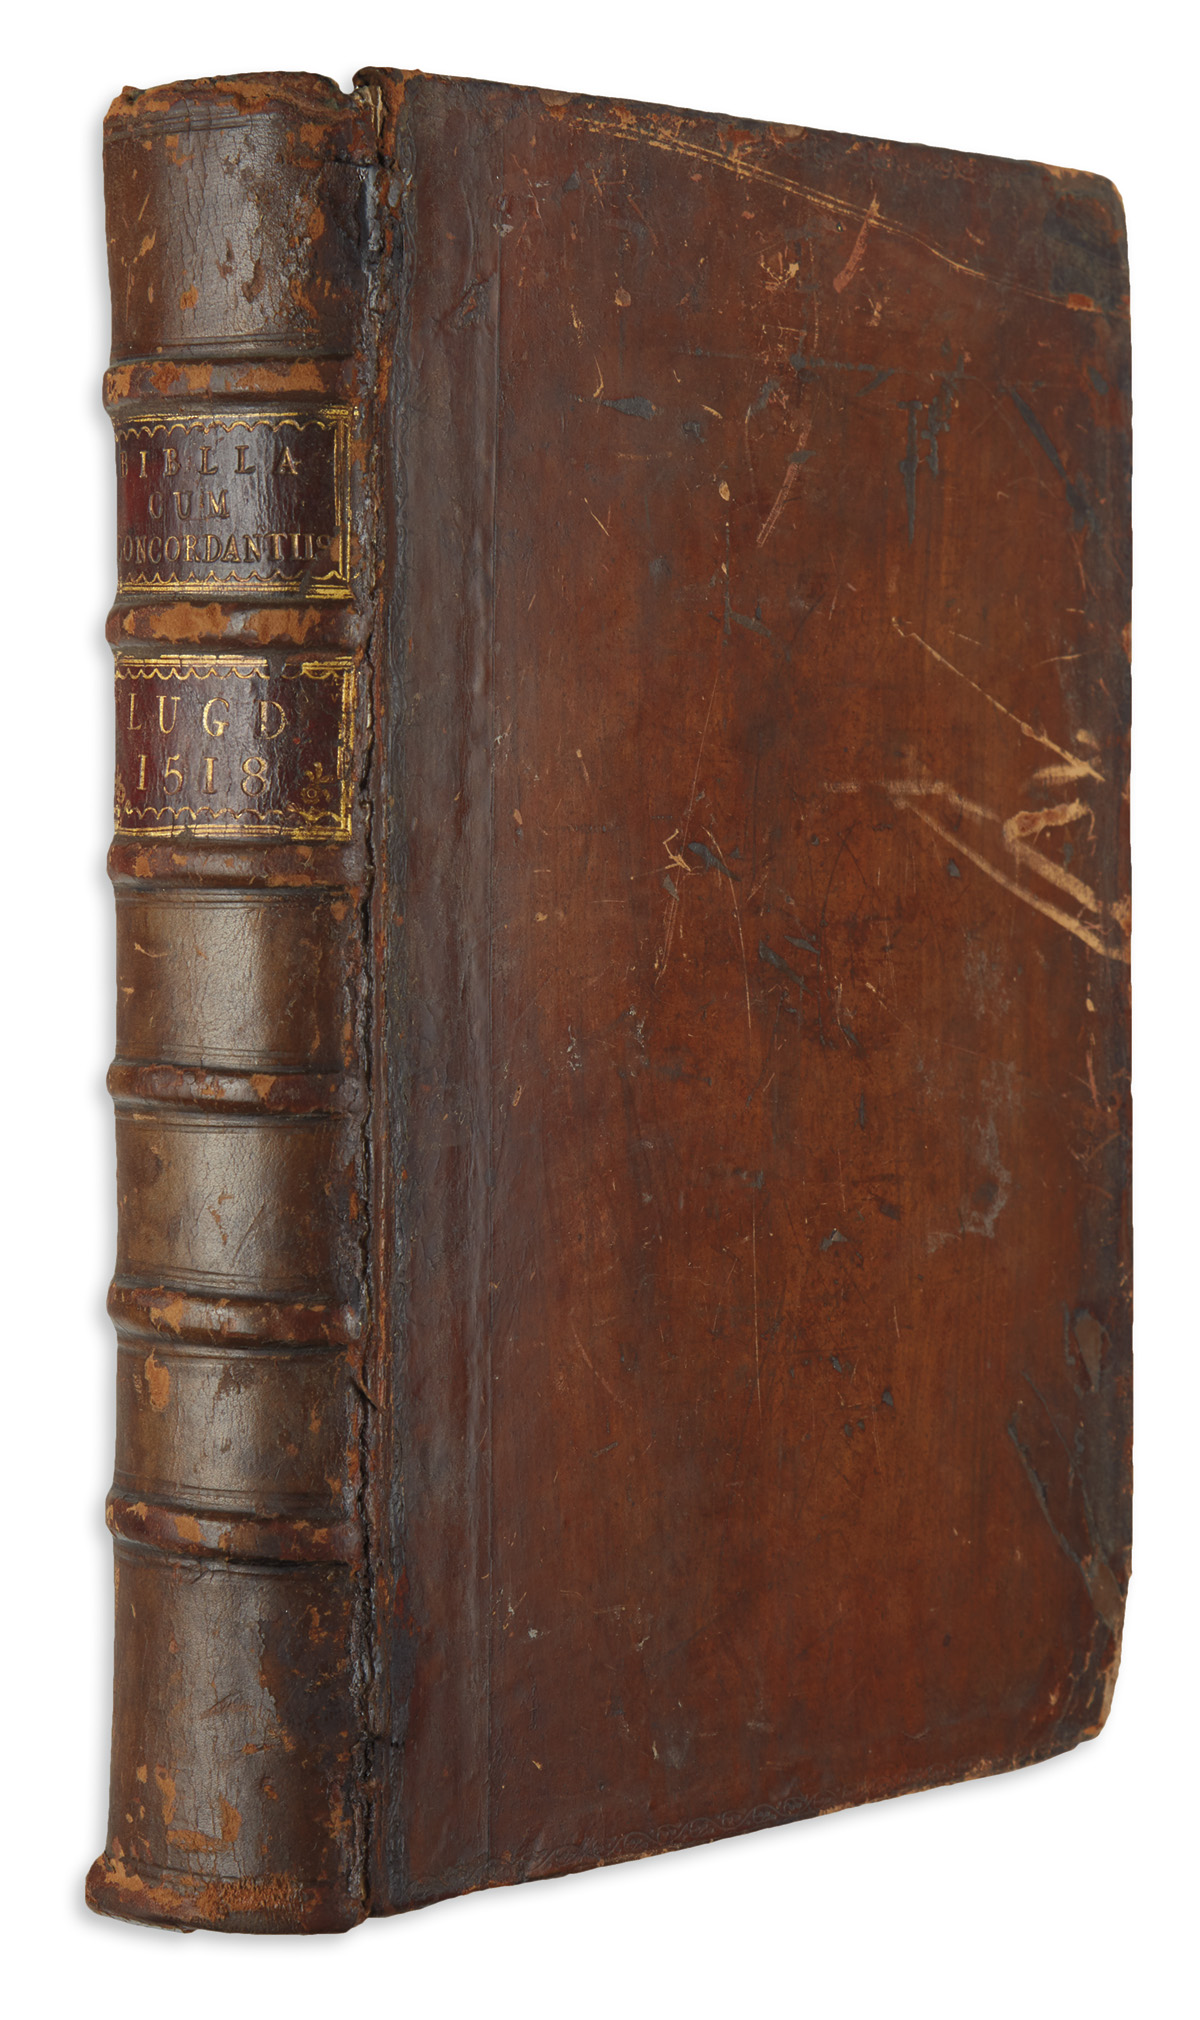 BIBLE IN LATIN.  Biblia cu[m] co[n]cordantiis veteris [et] novi testamenti [et] sacrorum canonum.  1518